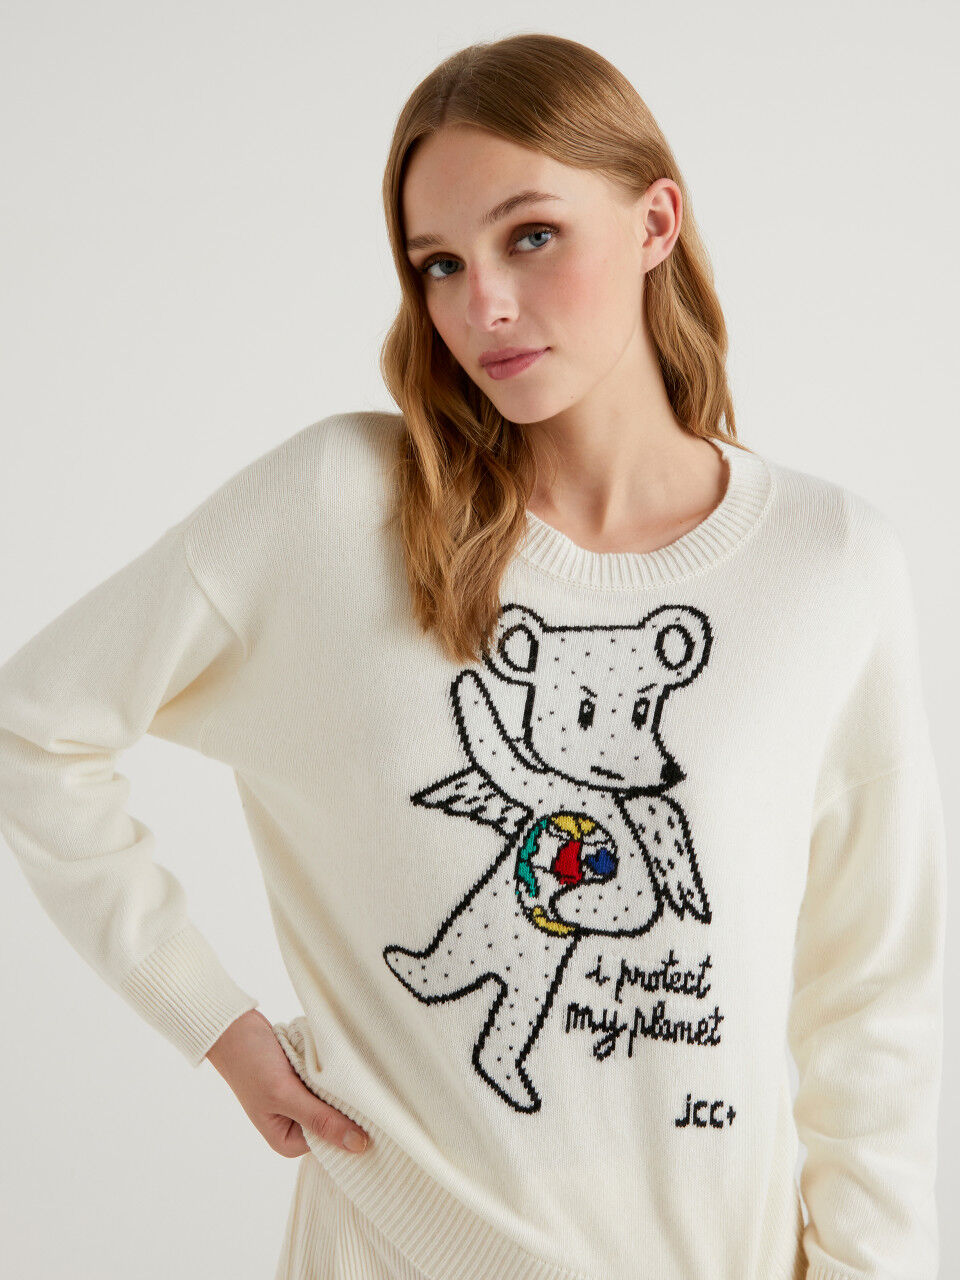 JCCxUCB sweater with bear inlay